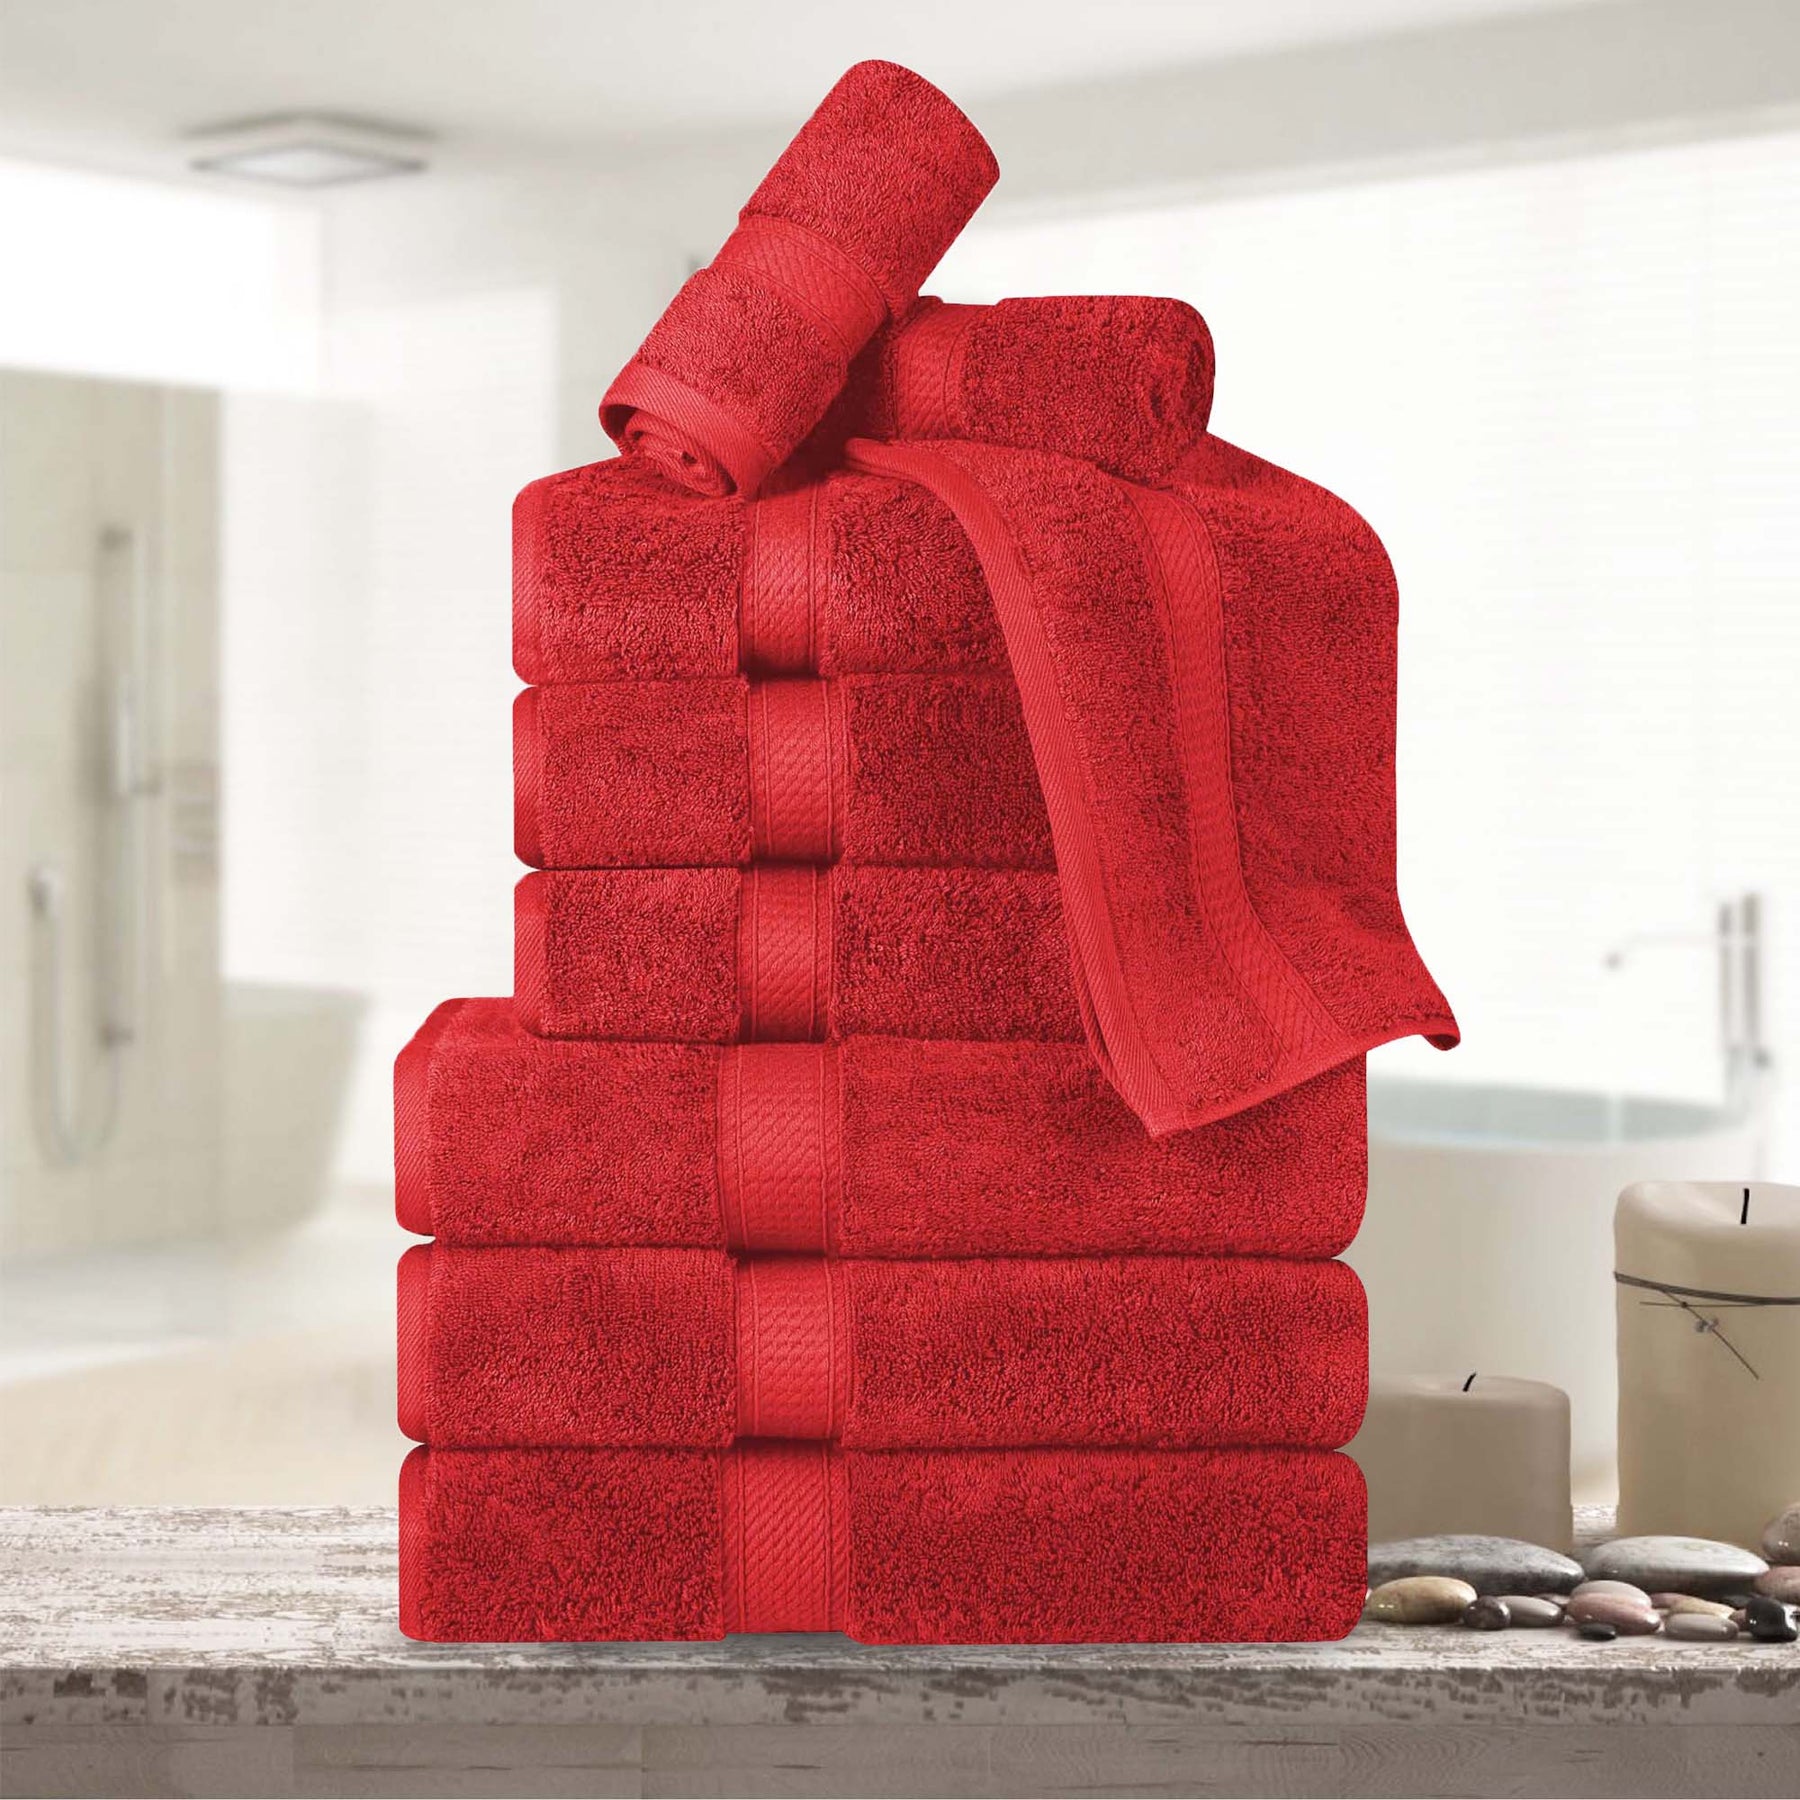 Egyptian Cotton Beach Towel Bath Towels Bathroom Thick Luxury